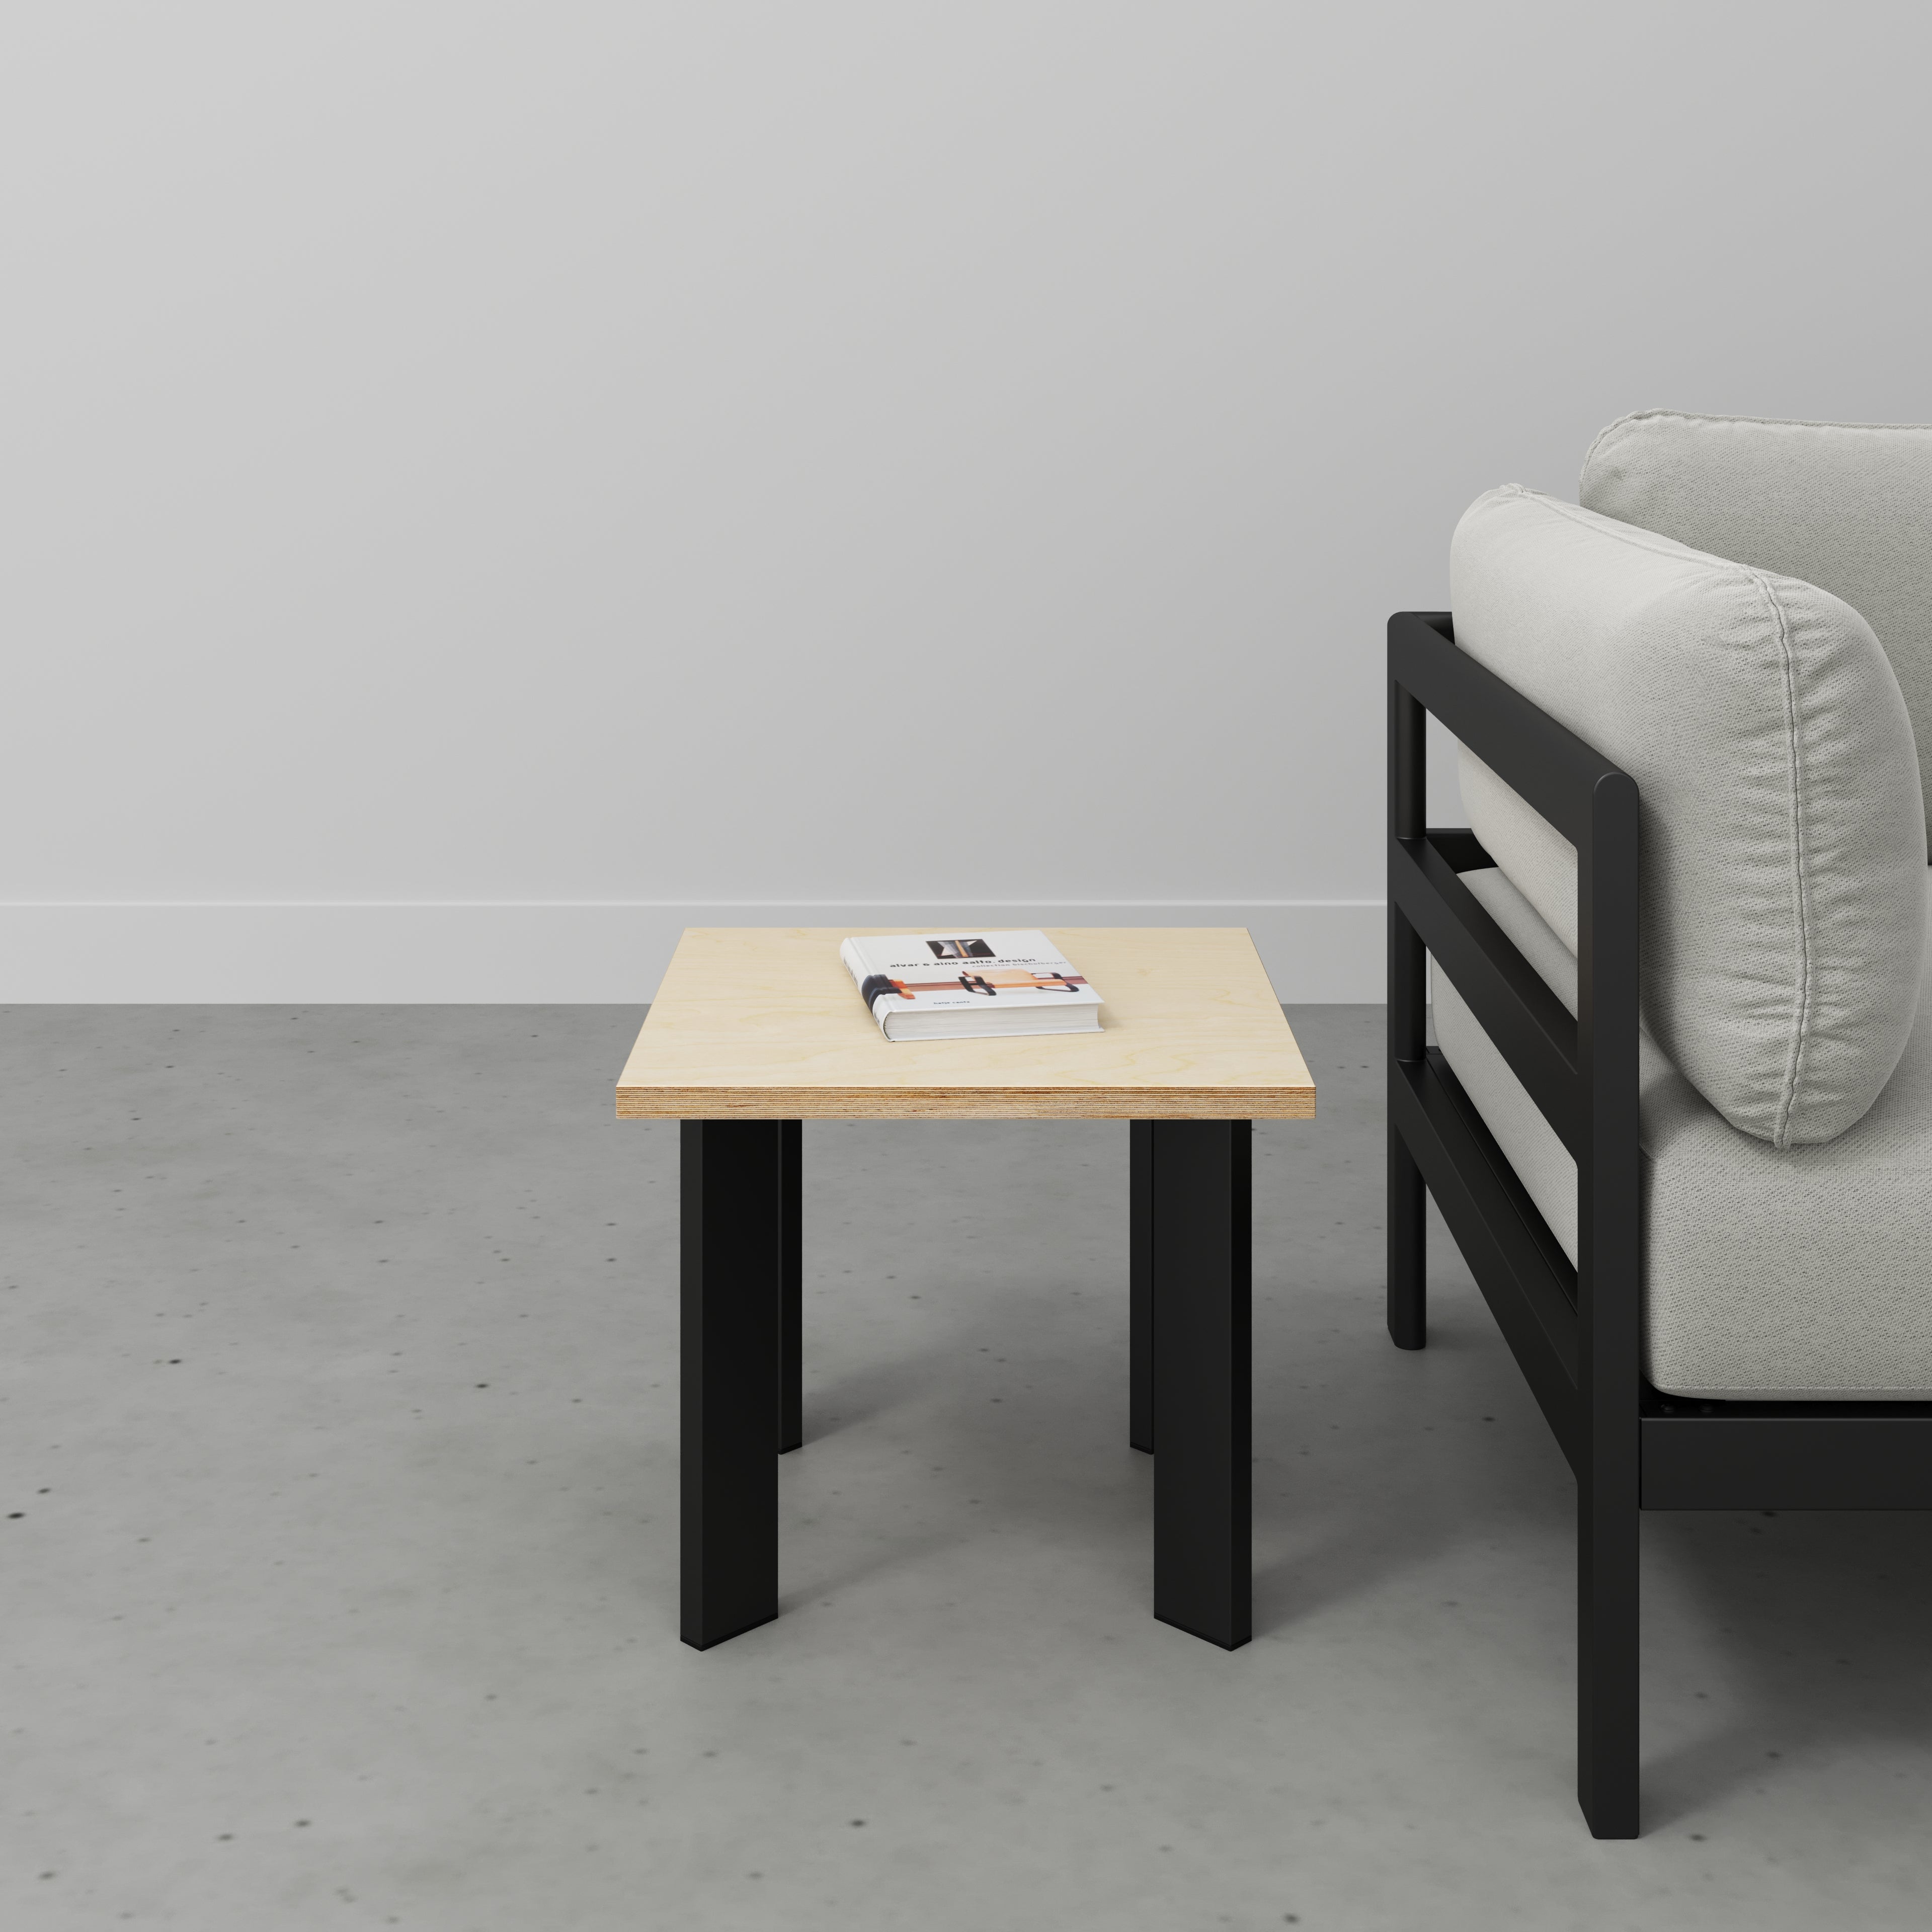 Custom Plywood Side Table with Rectangular Single Pin Legs